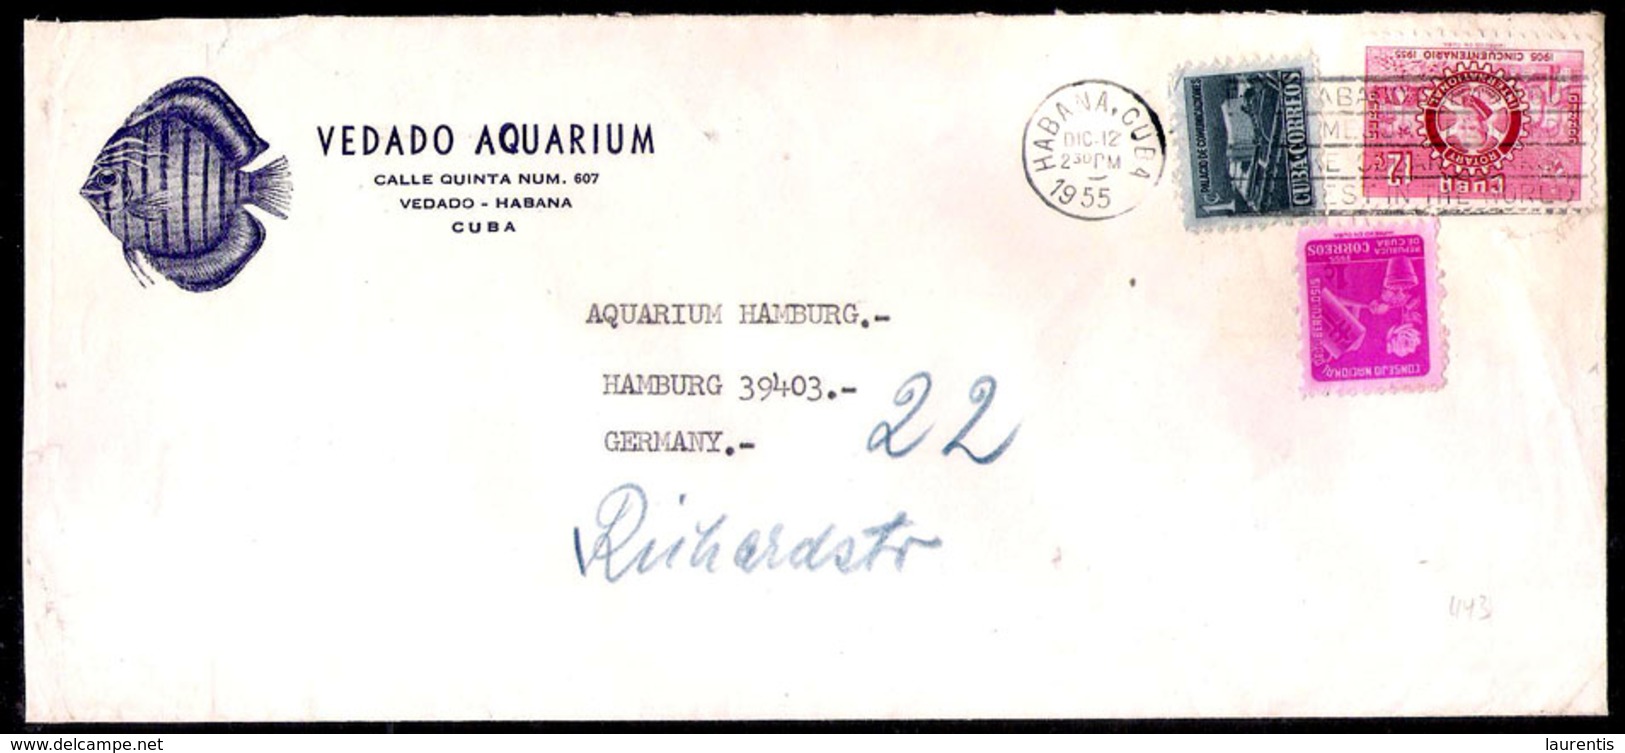 1301  Fishes - Aquarium - 1955 Cover - Cb - 3,75  A22 - Fische